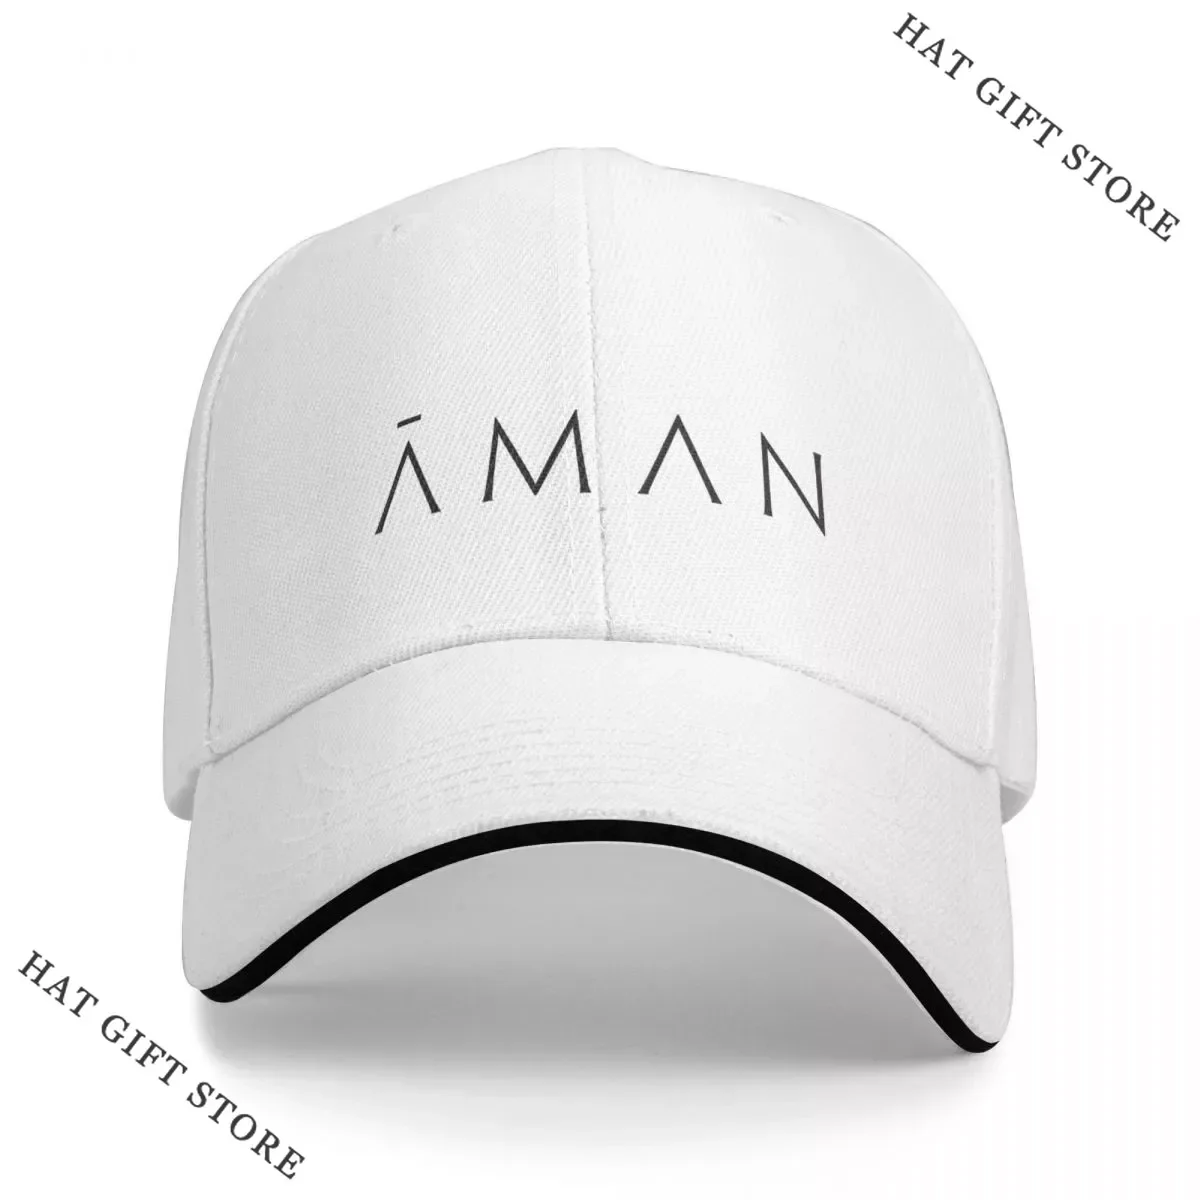 

Best Pernahkah-aman-resort-kewengen Cap Baseball Cap Uv Protection Solar Hat Luxury Man Hat Hats For Men Women's